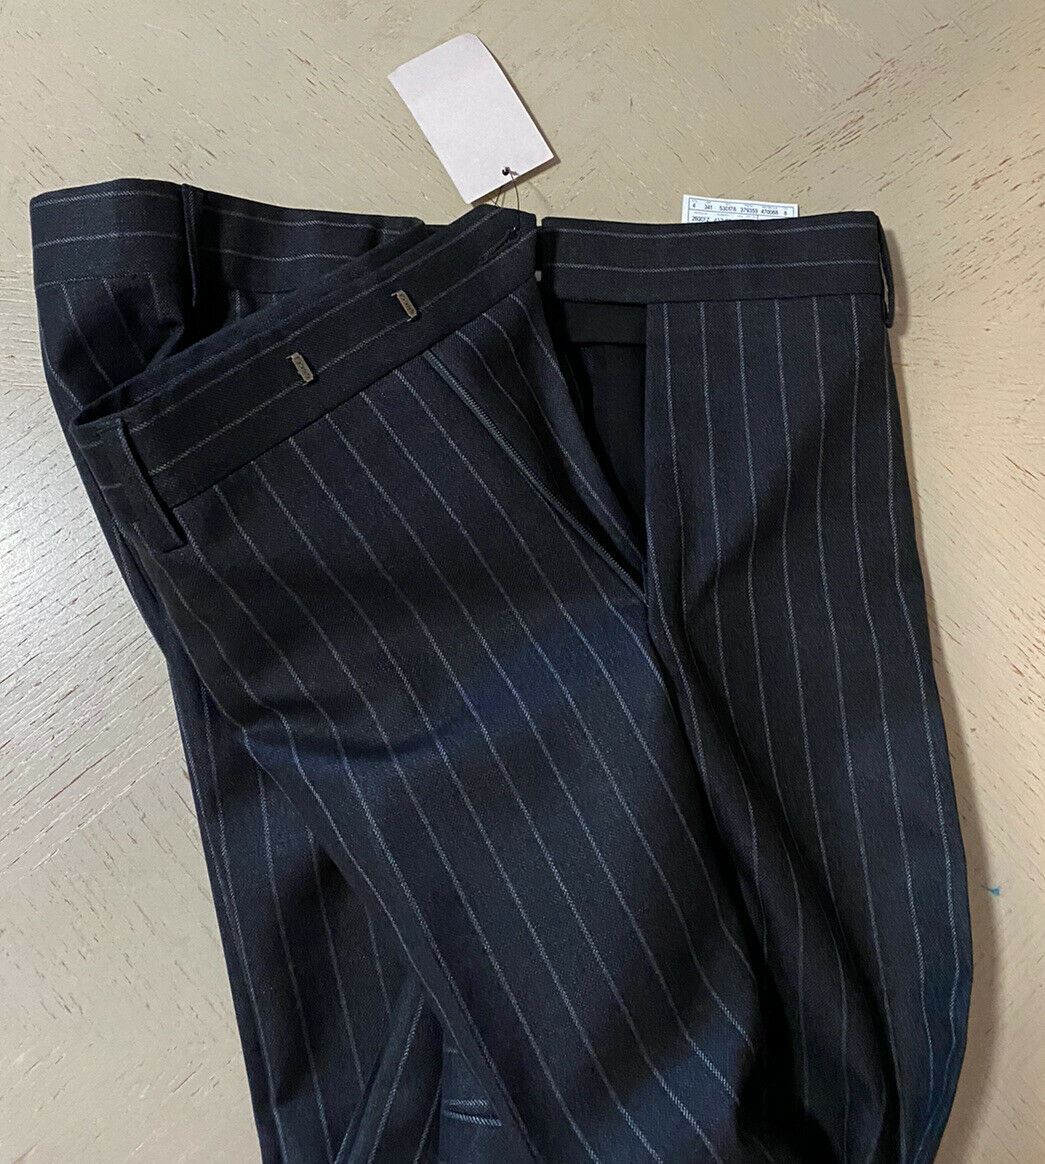 New $4490 Gucci Men’s Suit Striped DK Gray 38R US ( 48R Eu ) Italy